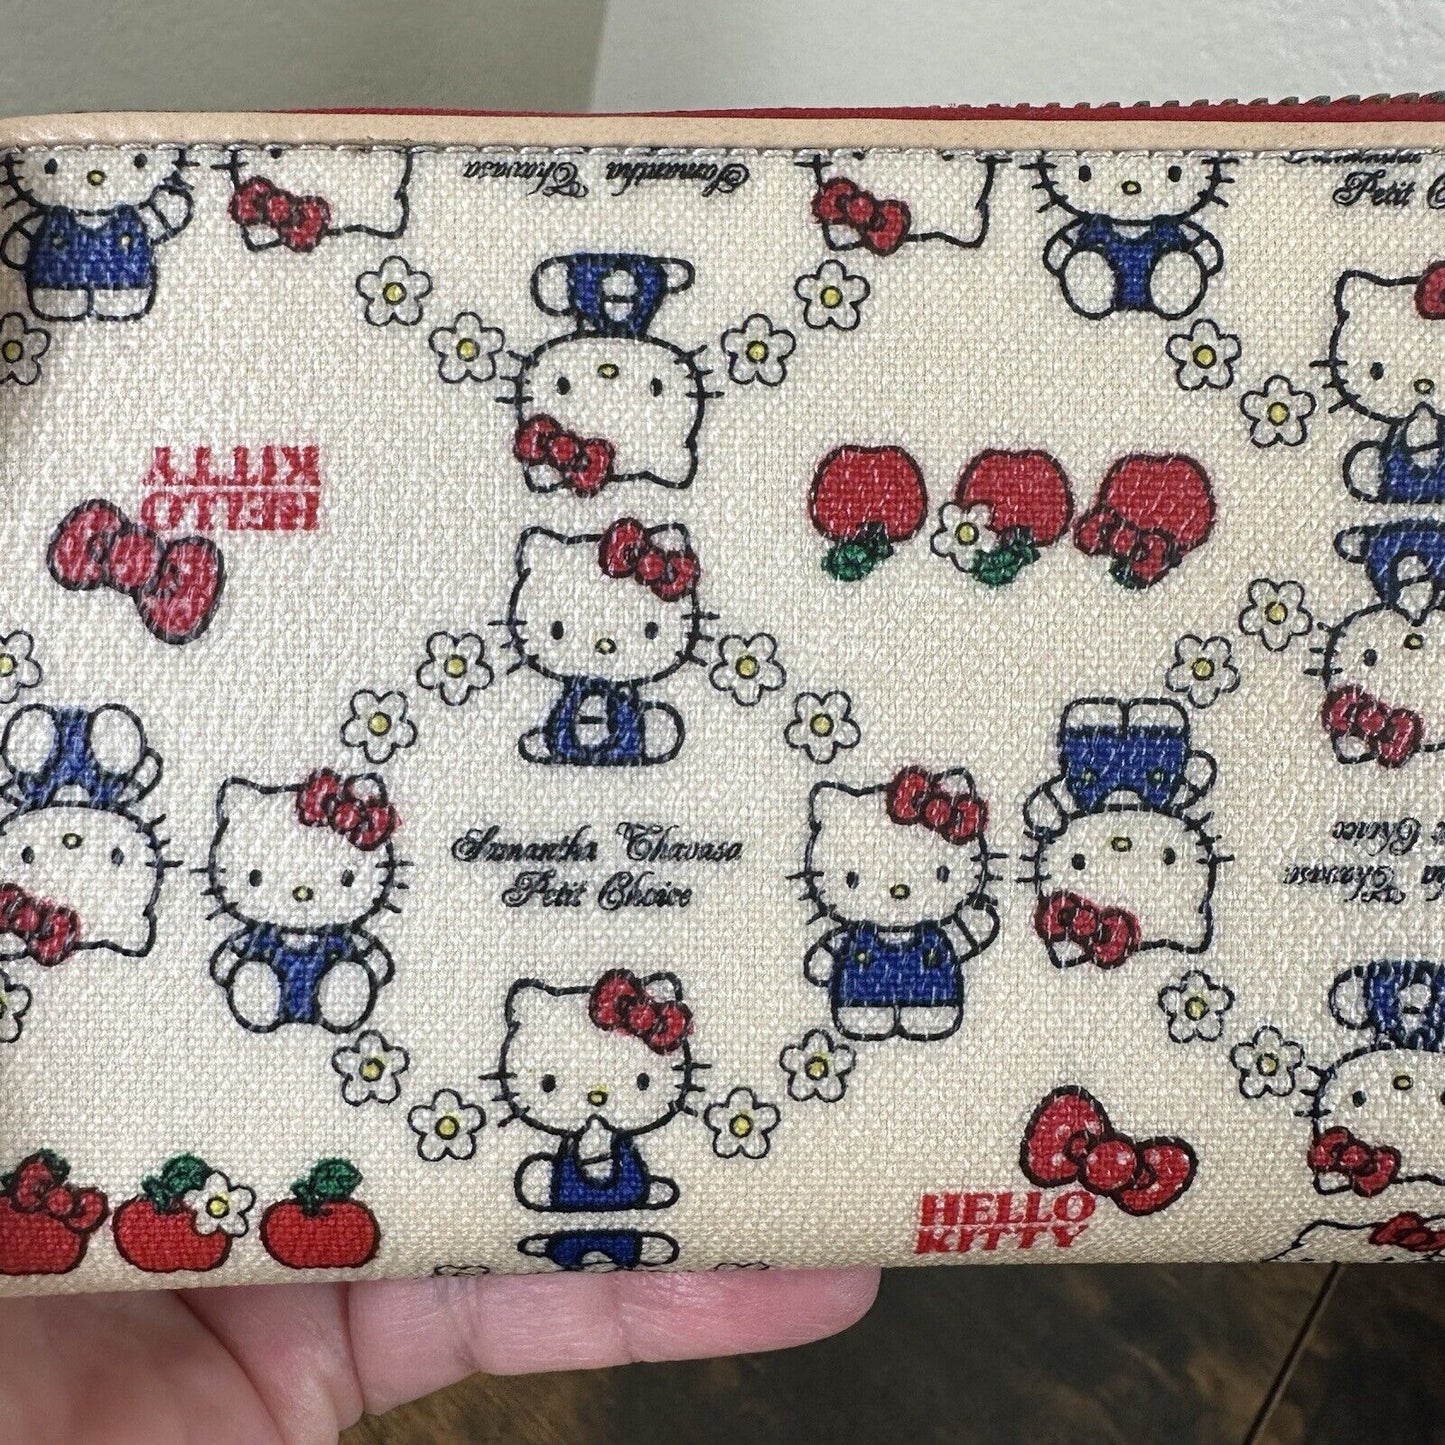 Samantha Thavasa x Sanrio Hello Kitty Long Wallet Zip Around